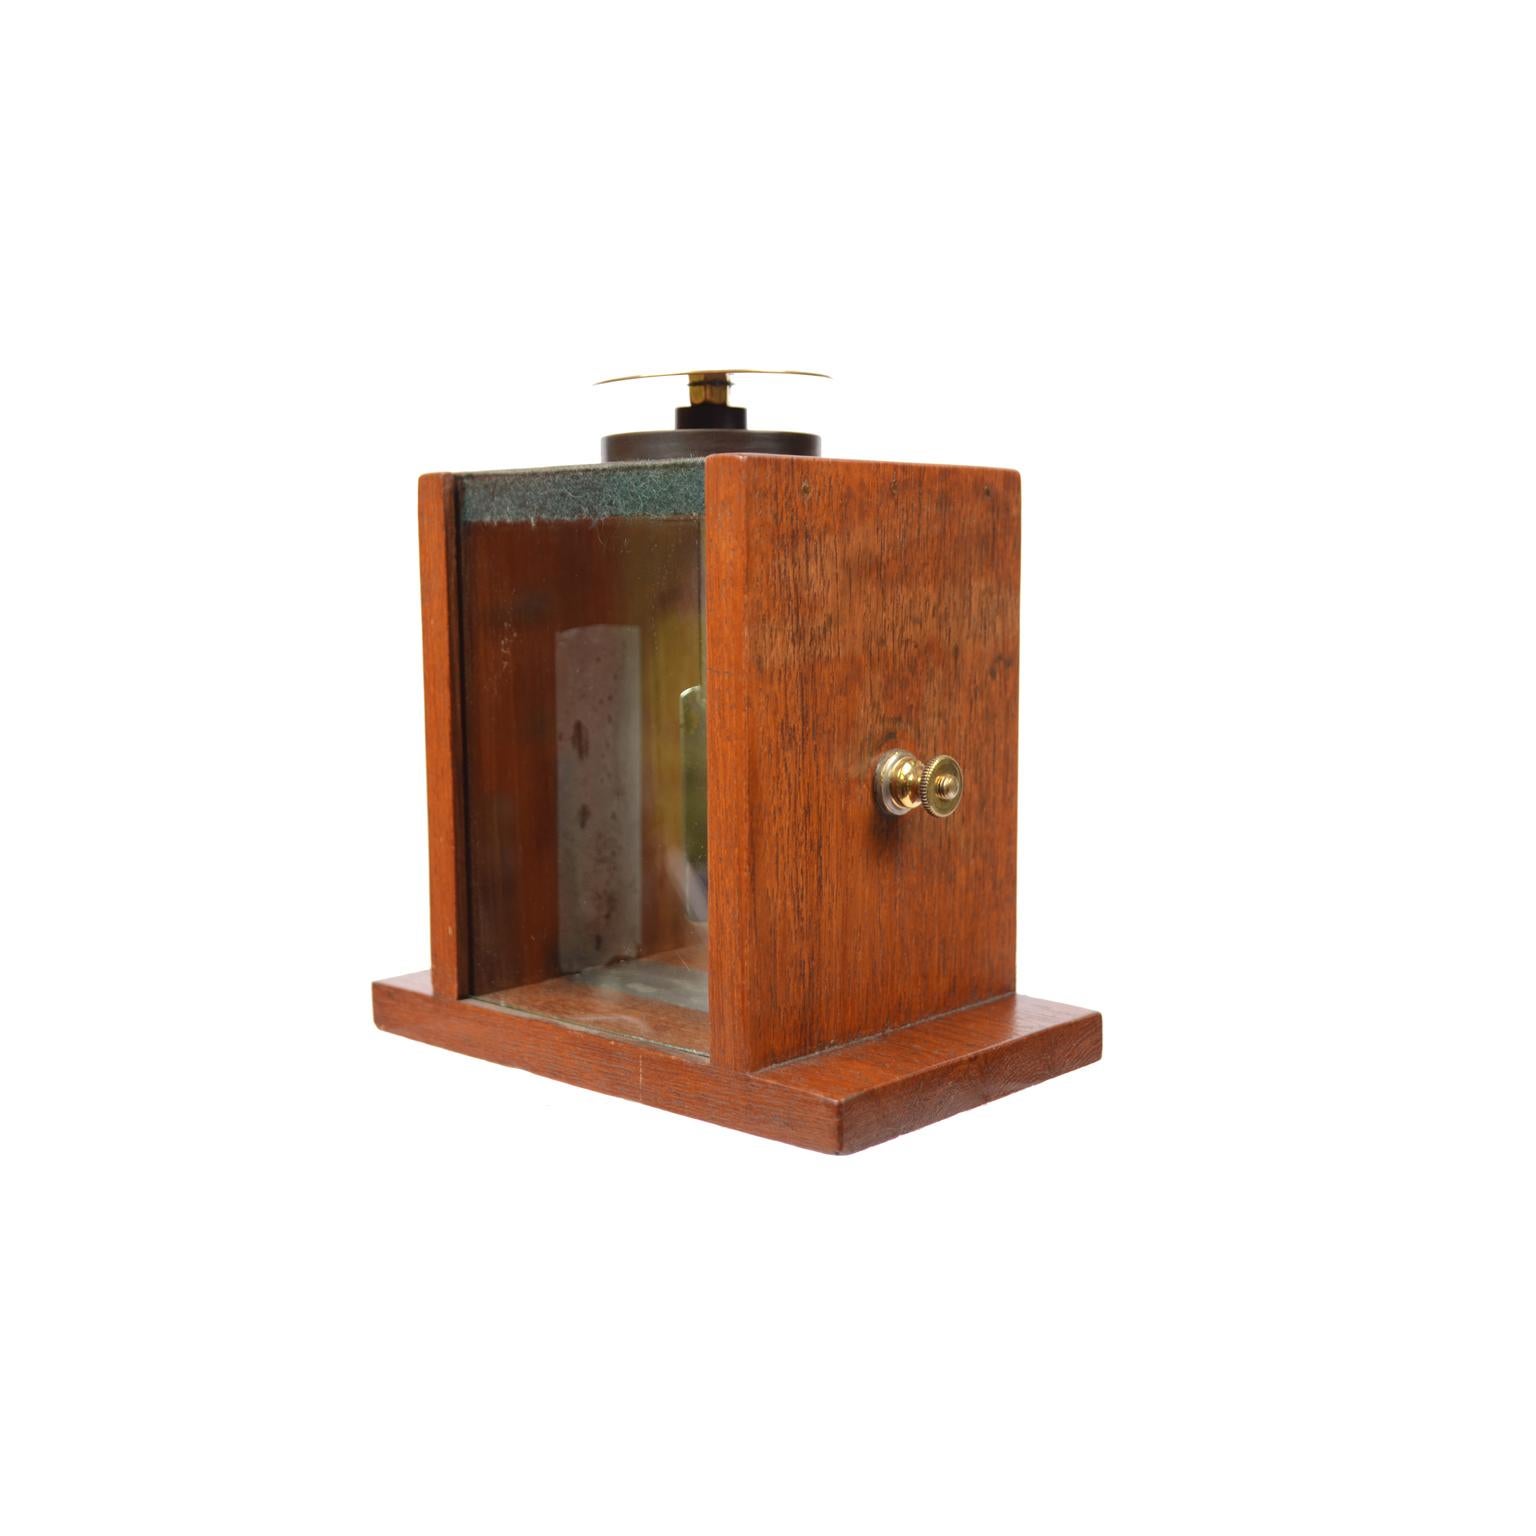 British 1900s Mahogany Condenser Electroscope Antique Physics Measuring Instrument